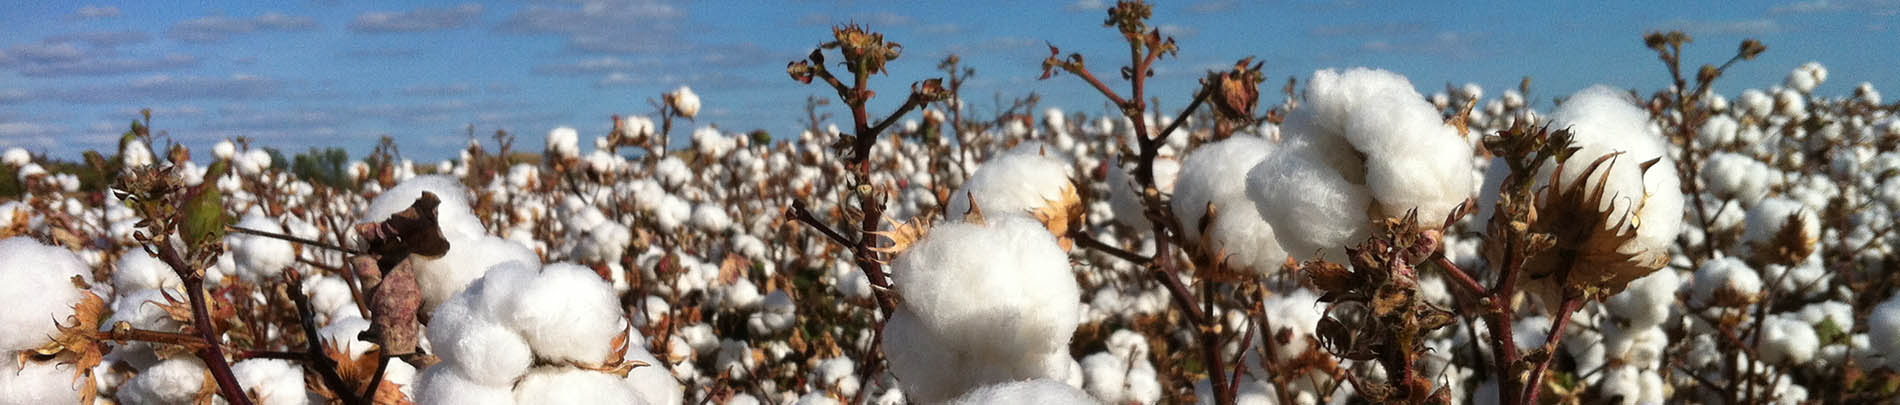 Cotton ready to pick